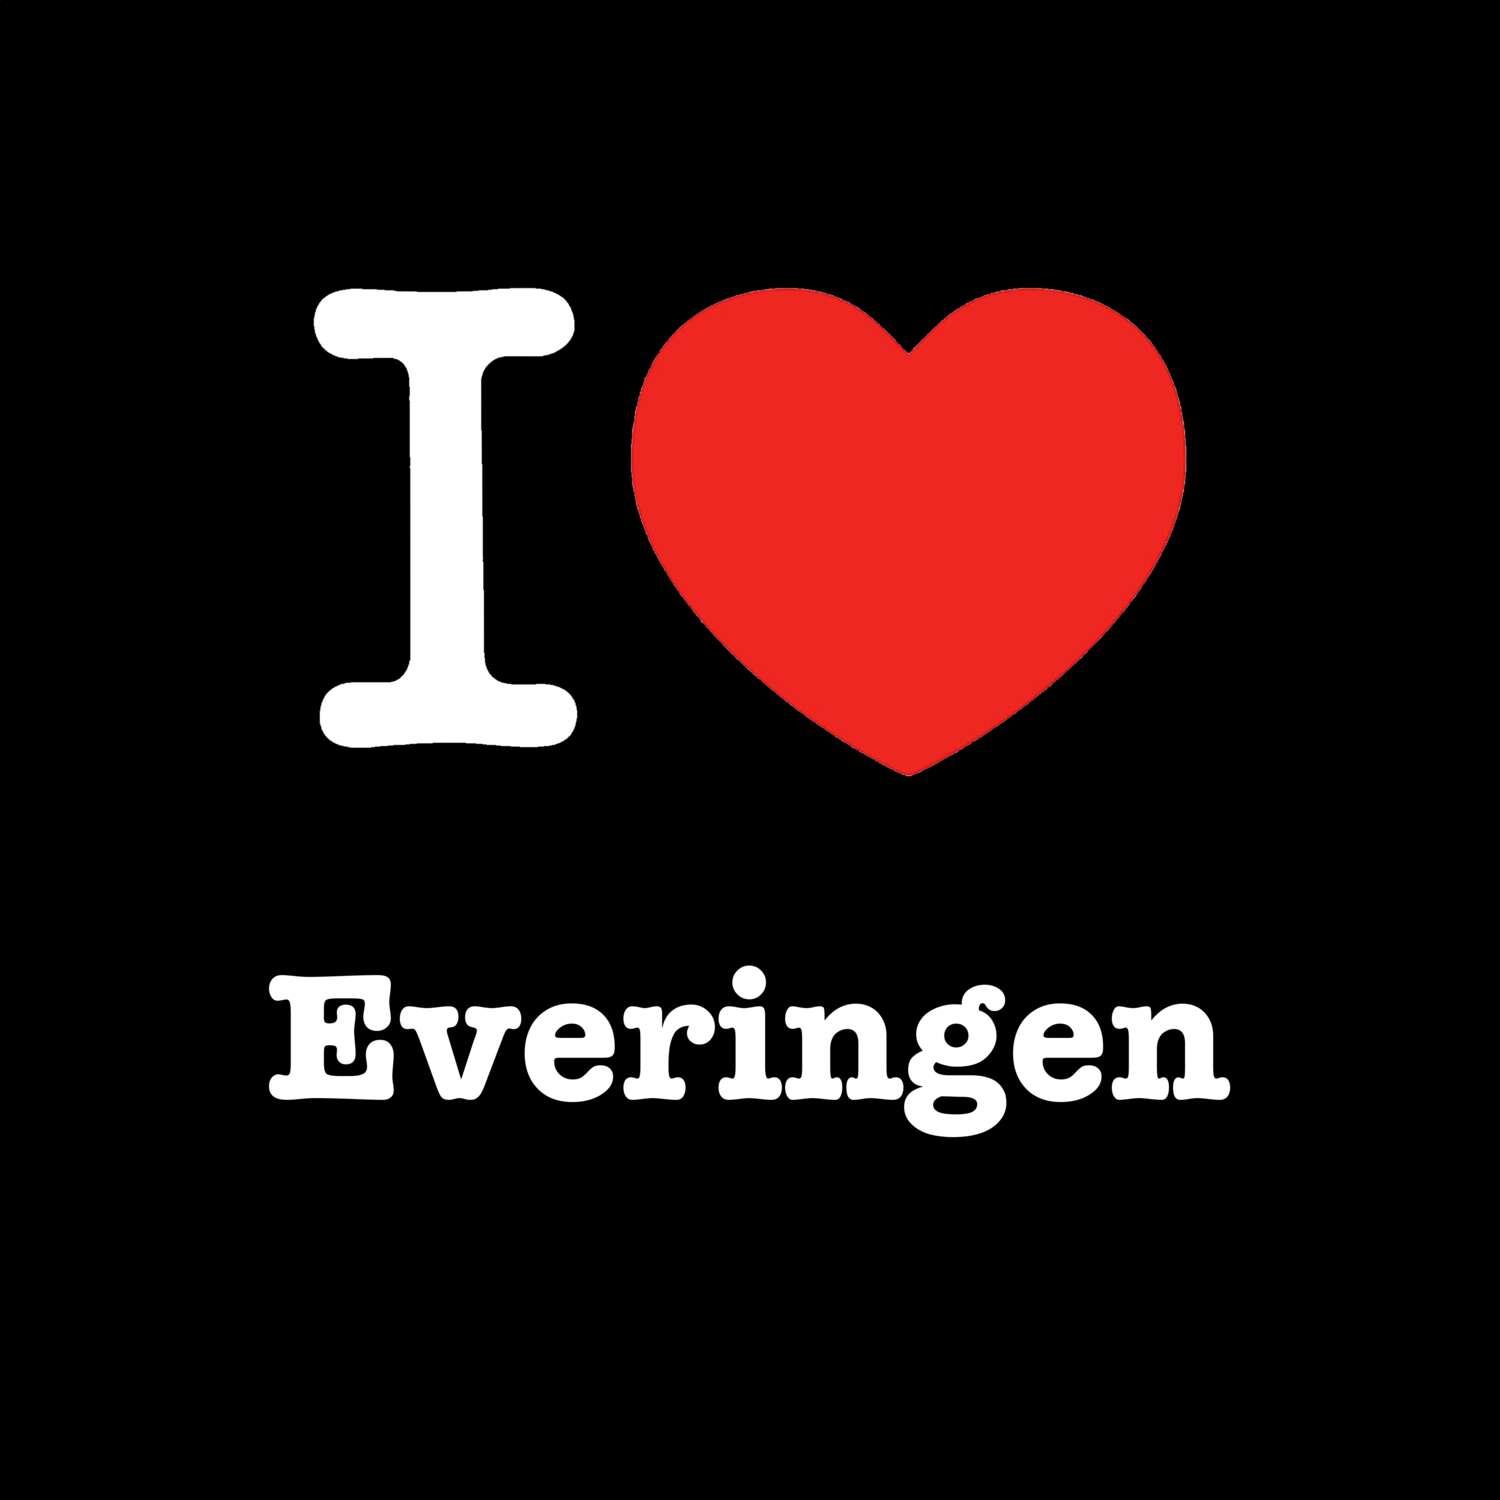 Everingen T-Shirt »I love«